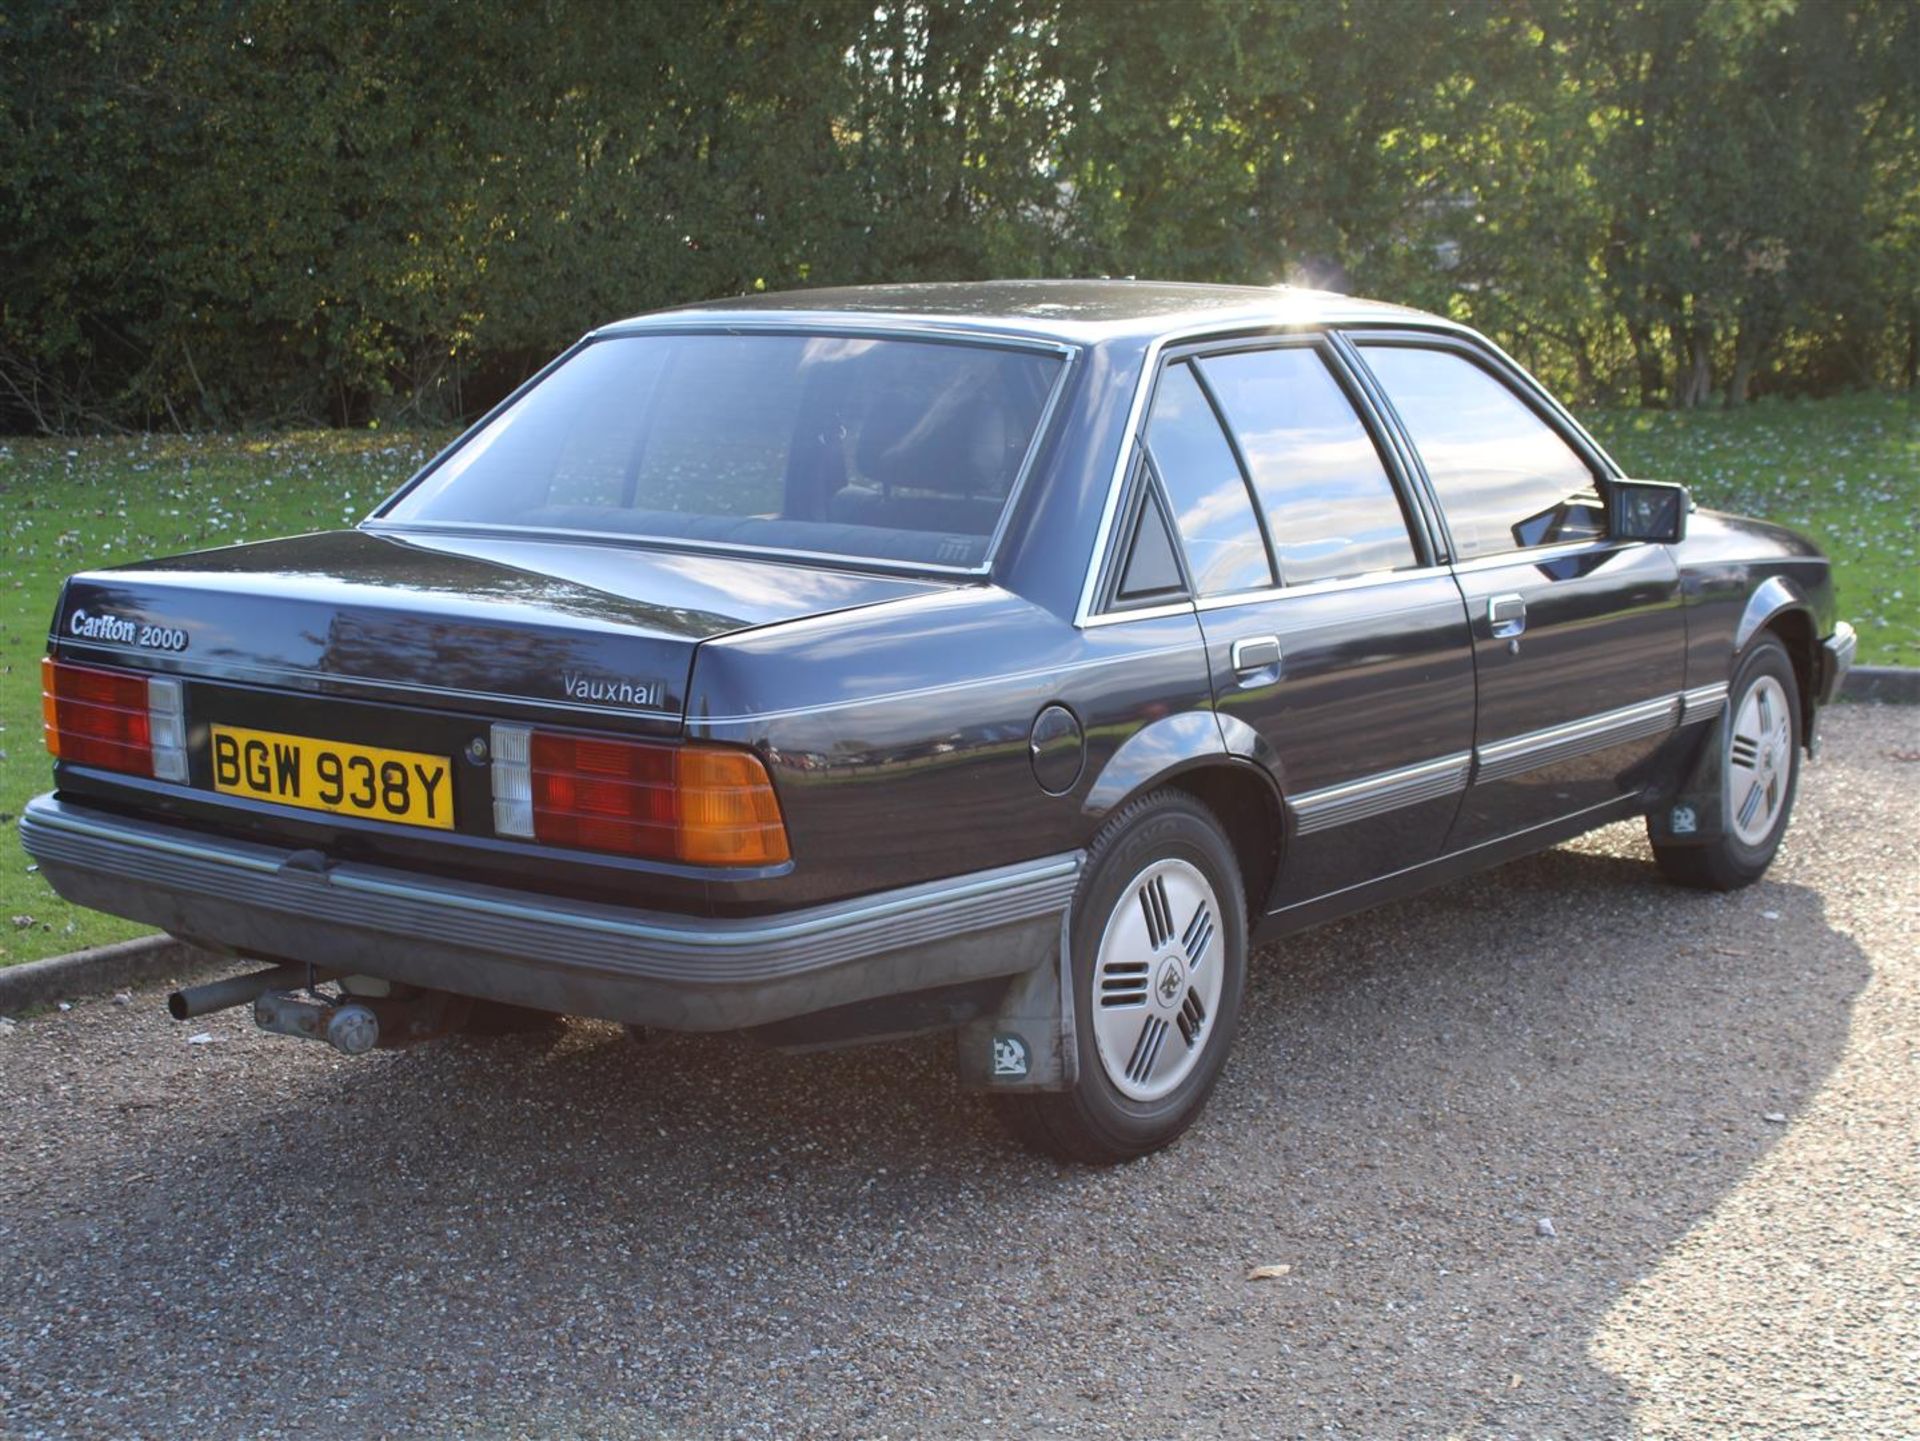 1983 Vauxhall Carlton 2.0 S GL - Image 5 of 27